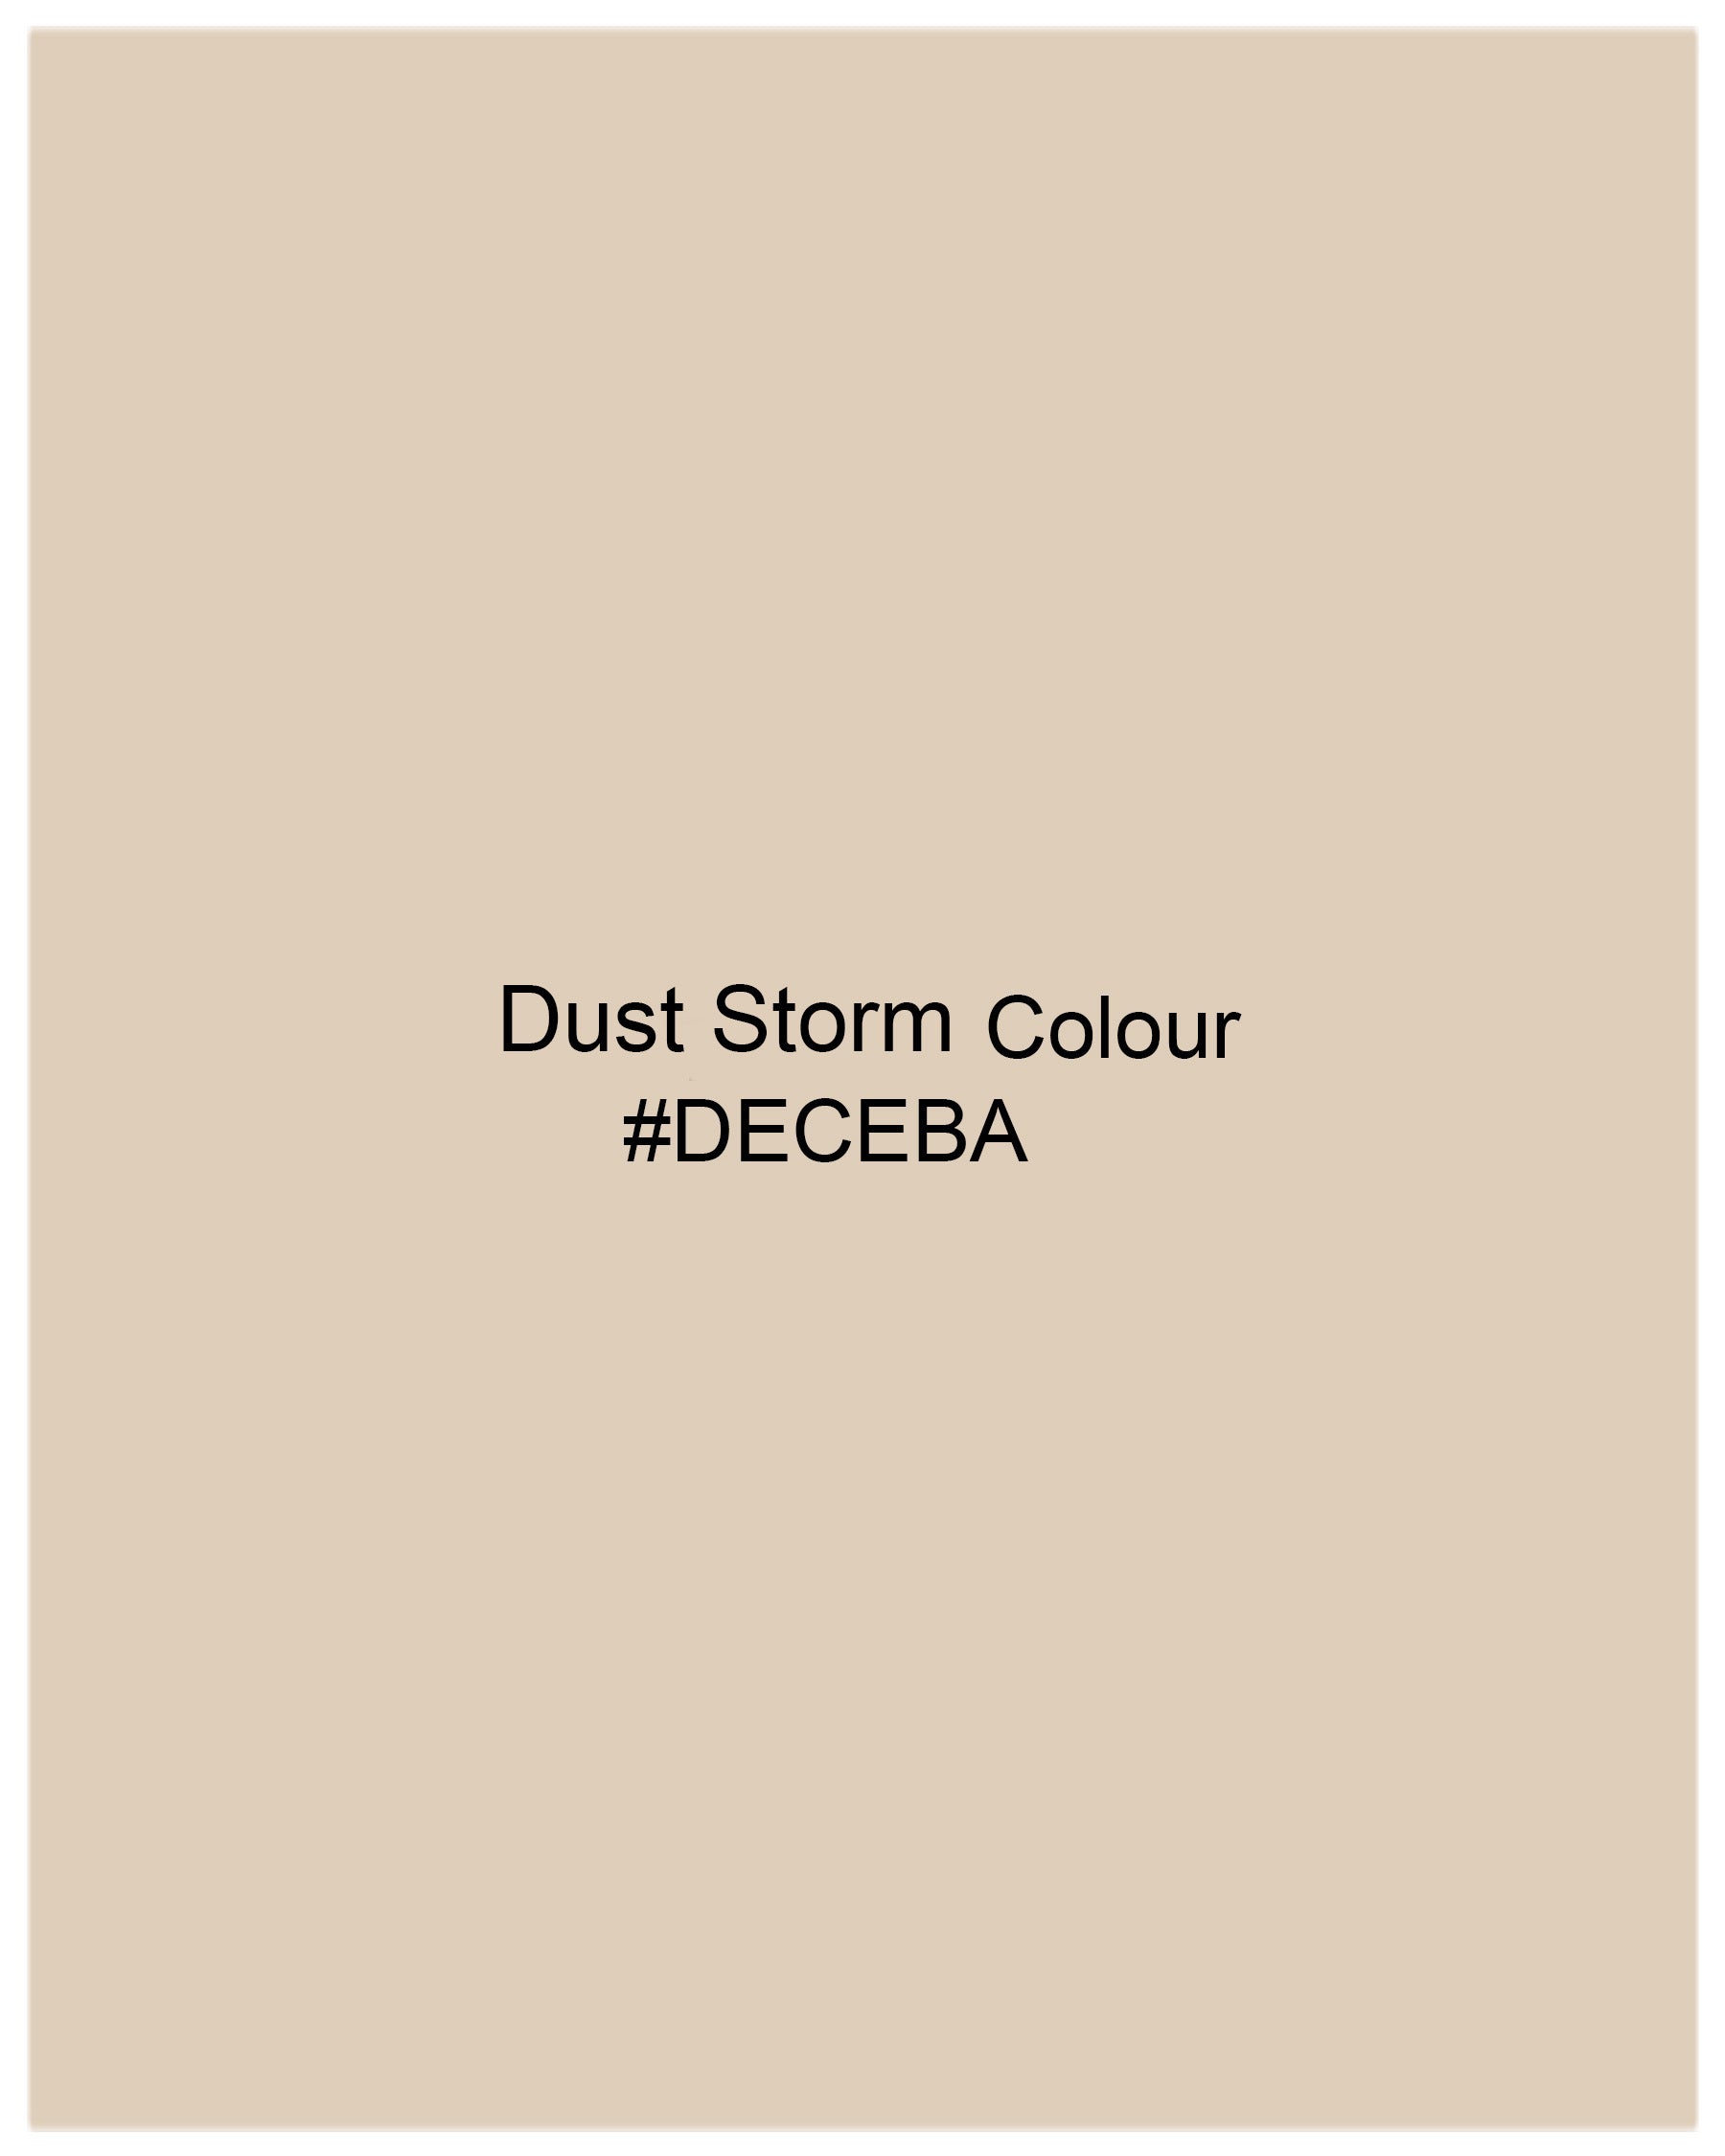 Dust Storm Cream Dobby Textured Premium Giza Cotton Shirt 7909-BLE-38, 7909-BLE-H-38, 7909-BLE-39, 7909-BLE-H-39, 7909-BLE-40, 7909-BLE-H-40, 7909-BLE-42, 7909-BLE-H-42, 7909-BLE-44, 7909-BLE-H-44, 7909-BLE-46, 7909-BLE-H-46, 7909-BLE-48, 7909-BLE-H-48, 7909-BLE-50, 7909-BLE-H-50, 7909-BLE-52, 7909-BLE-H-52